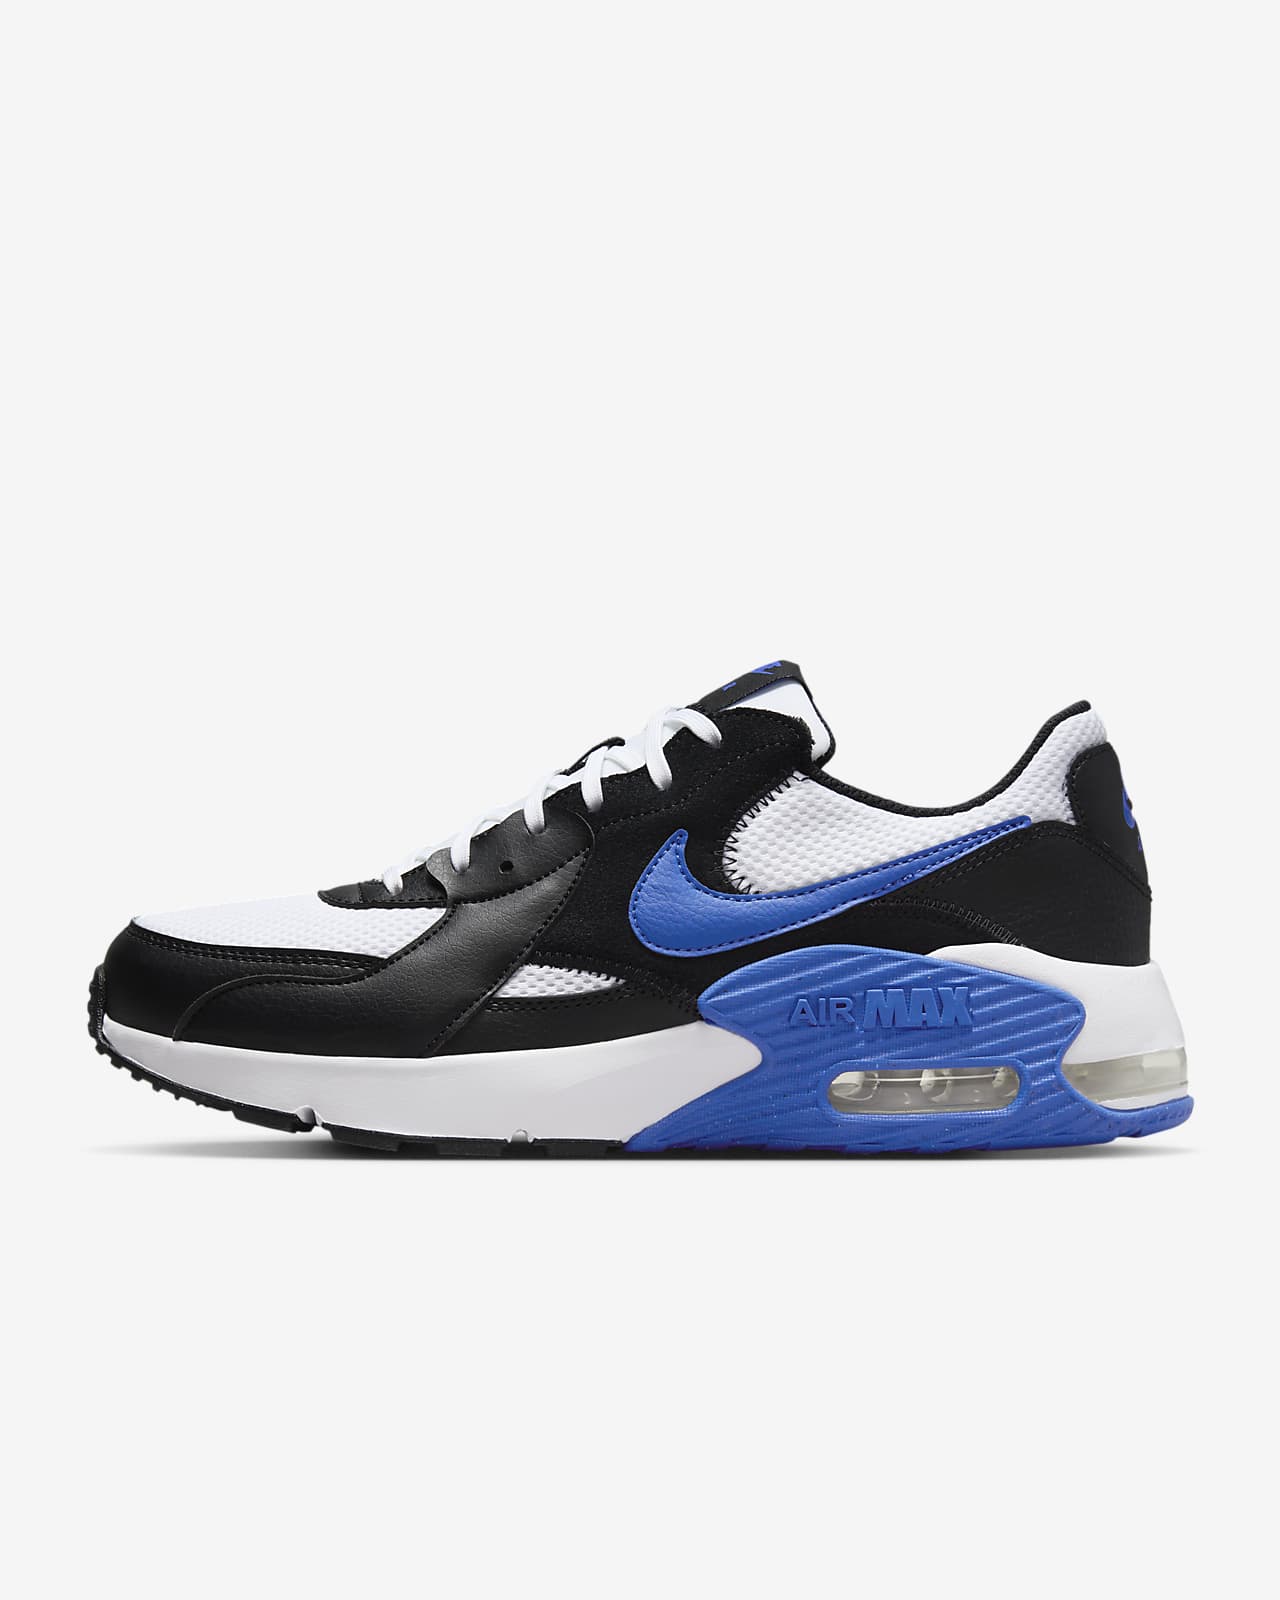 Nike Air Max Sneakers, Basketball Shoes | Shoe Carnival